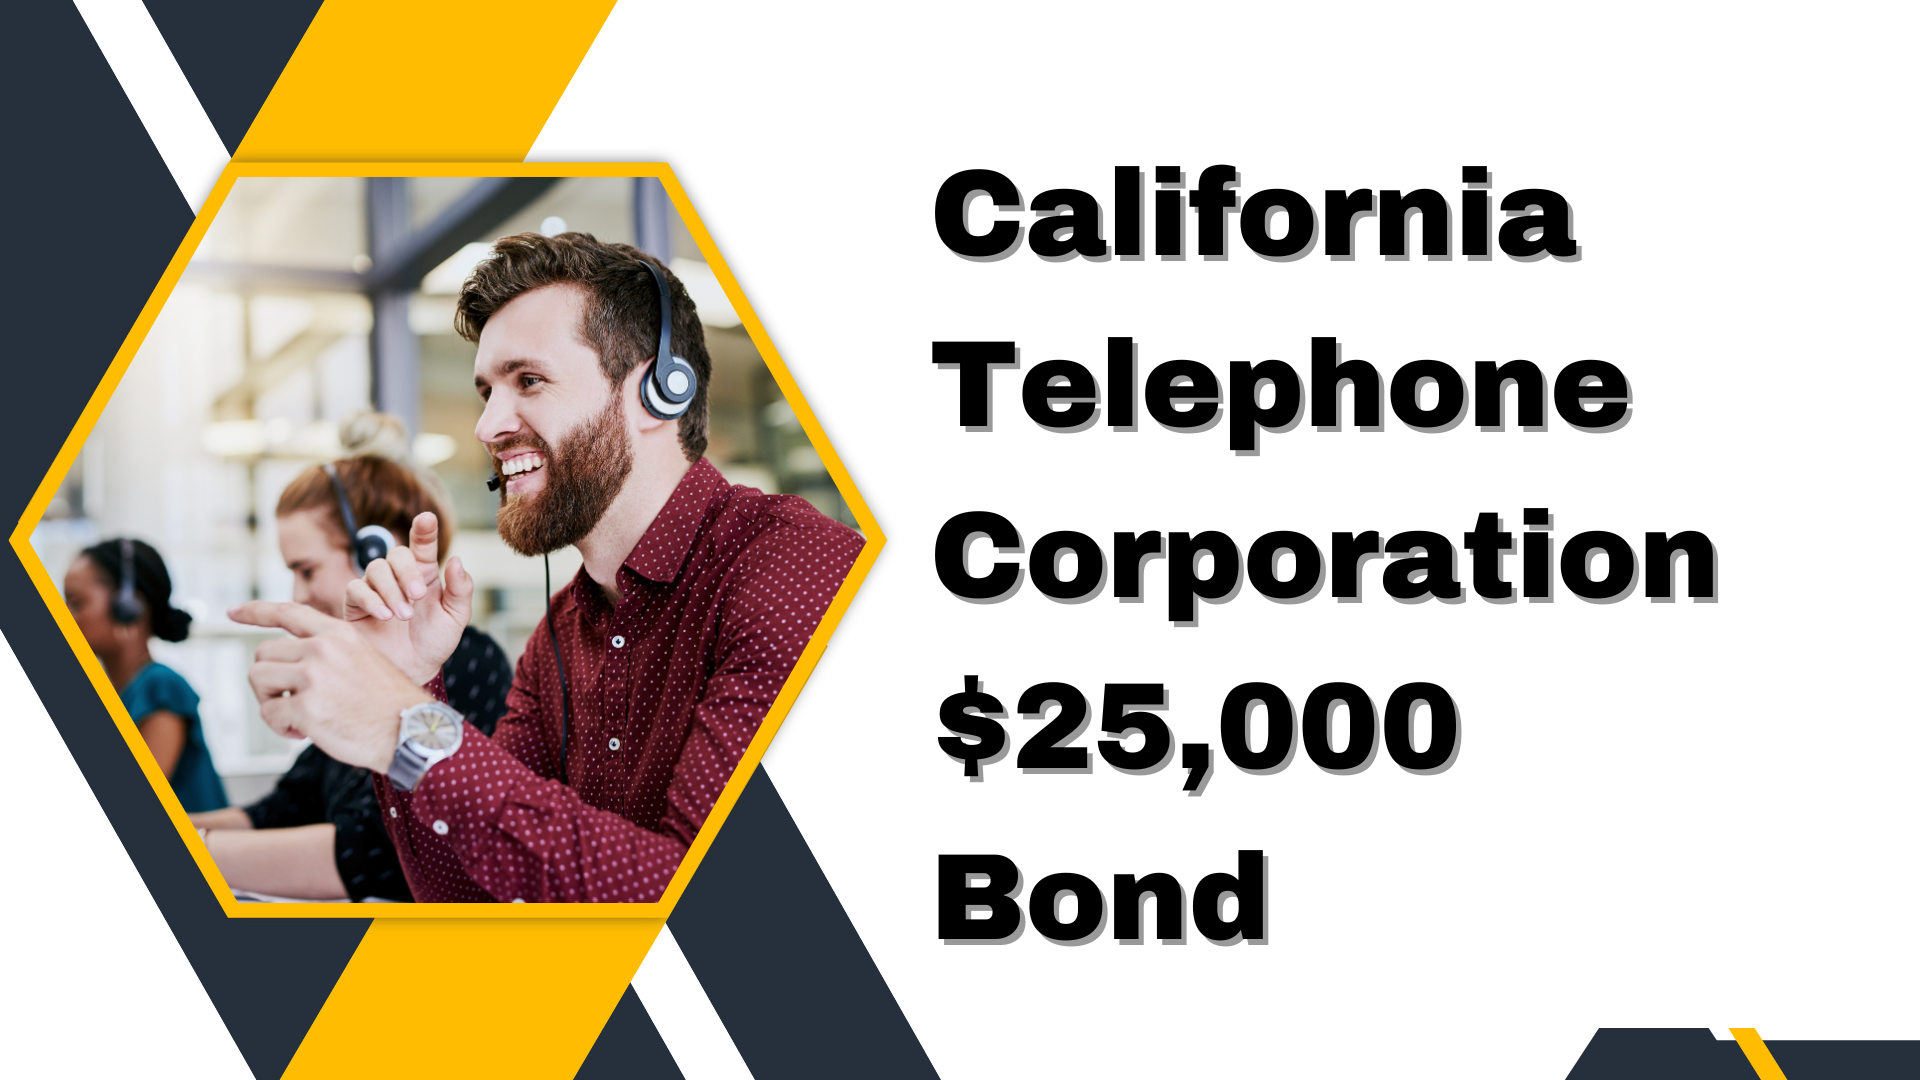 Surety Bond-California Telephone Corporation $25,000 Bond